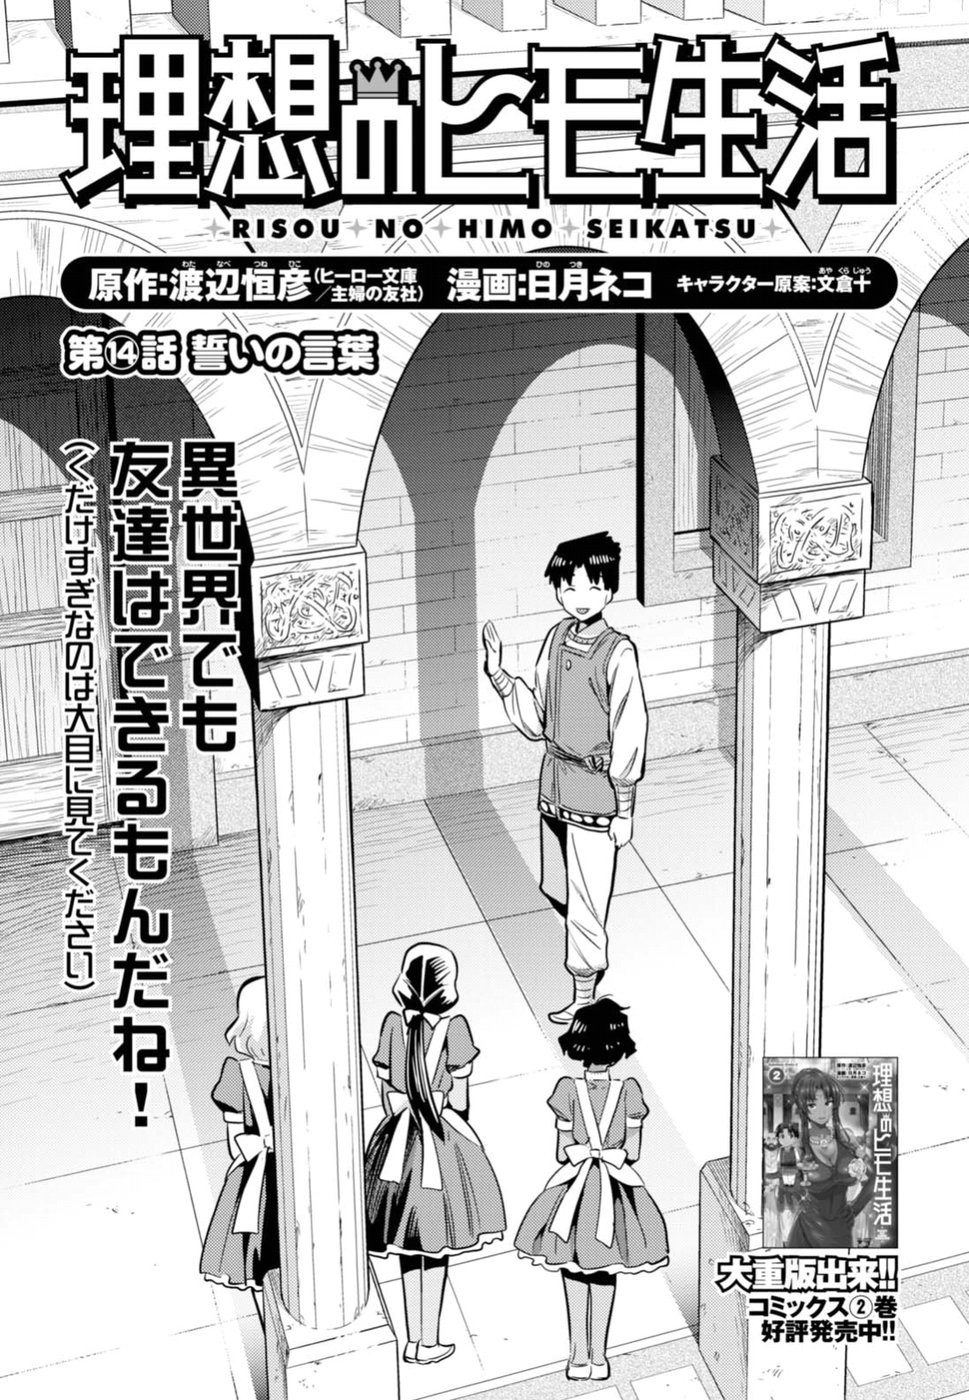 Risou no Himo Seikatsu - Chapter 014 - Page 1